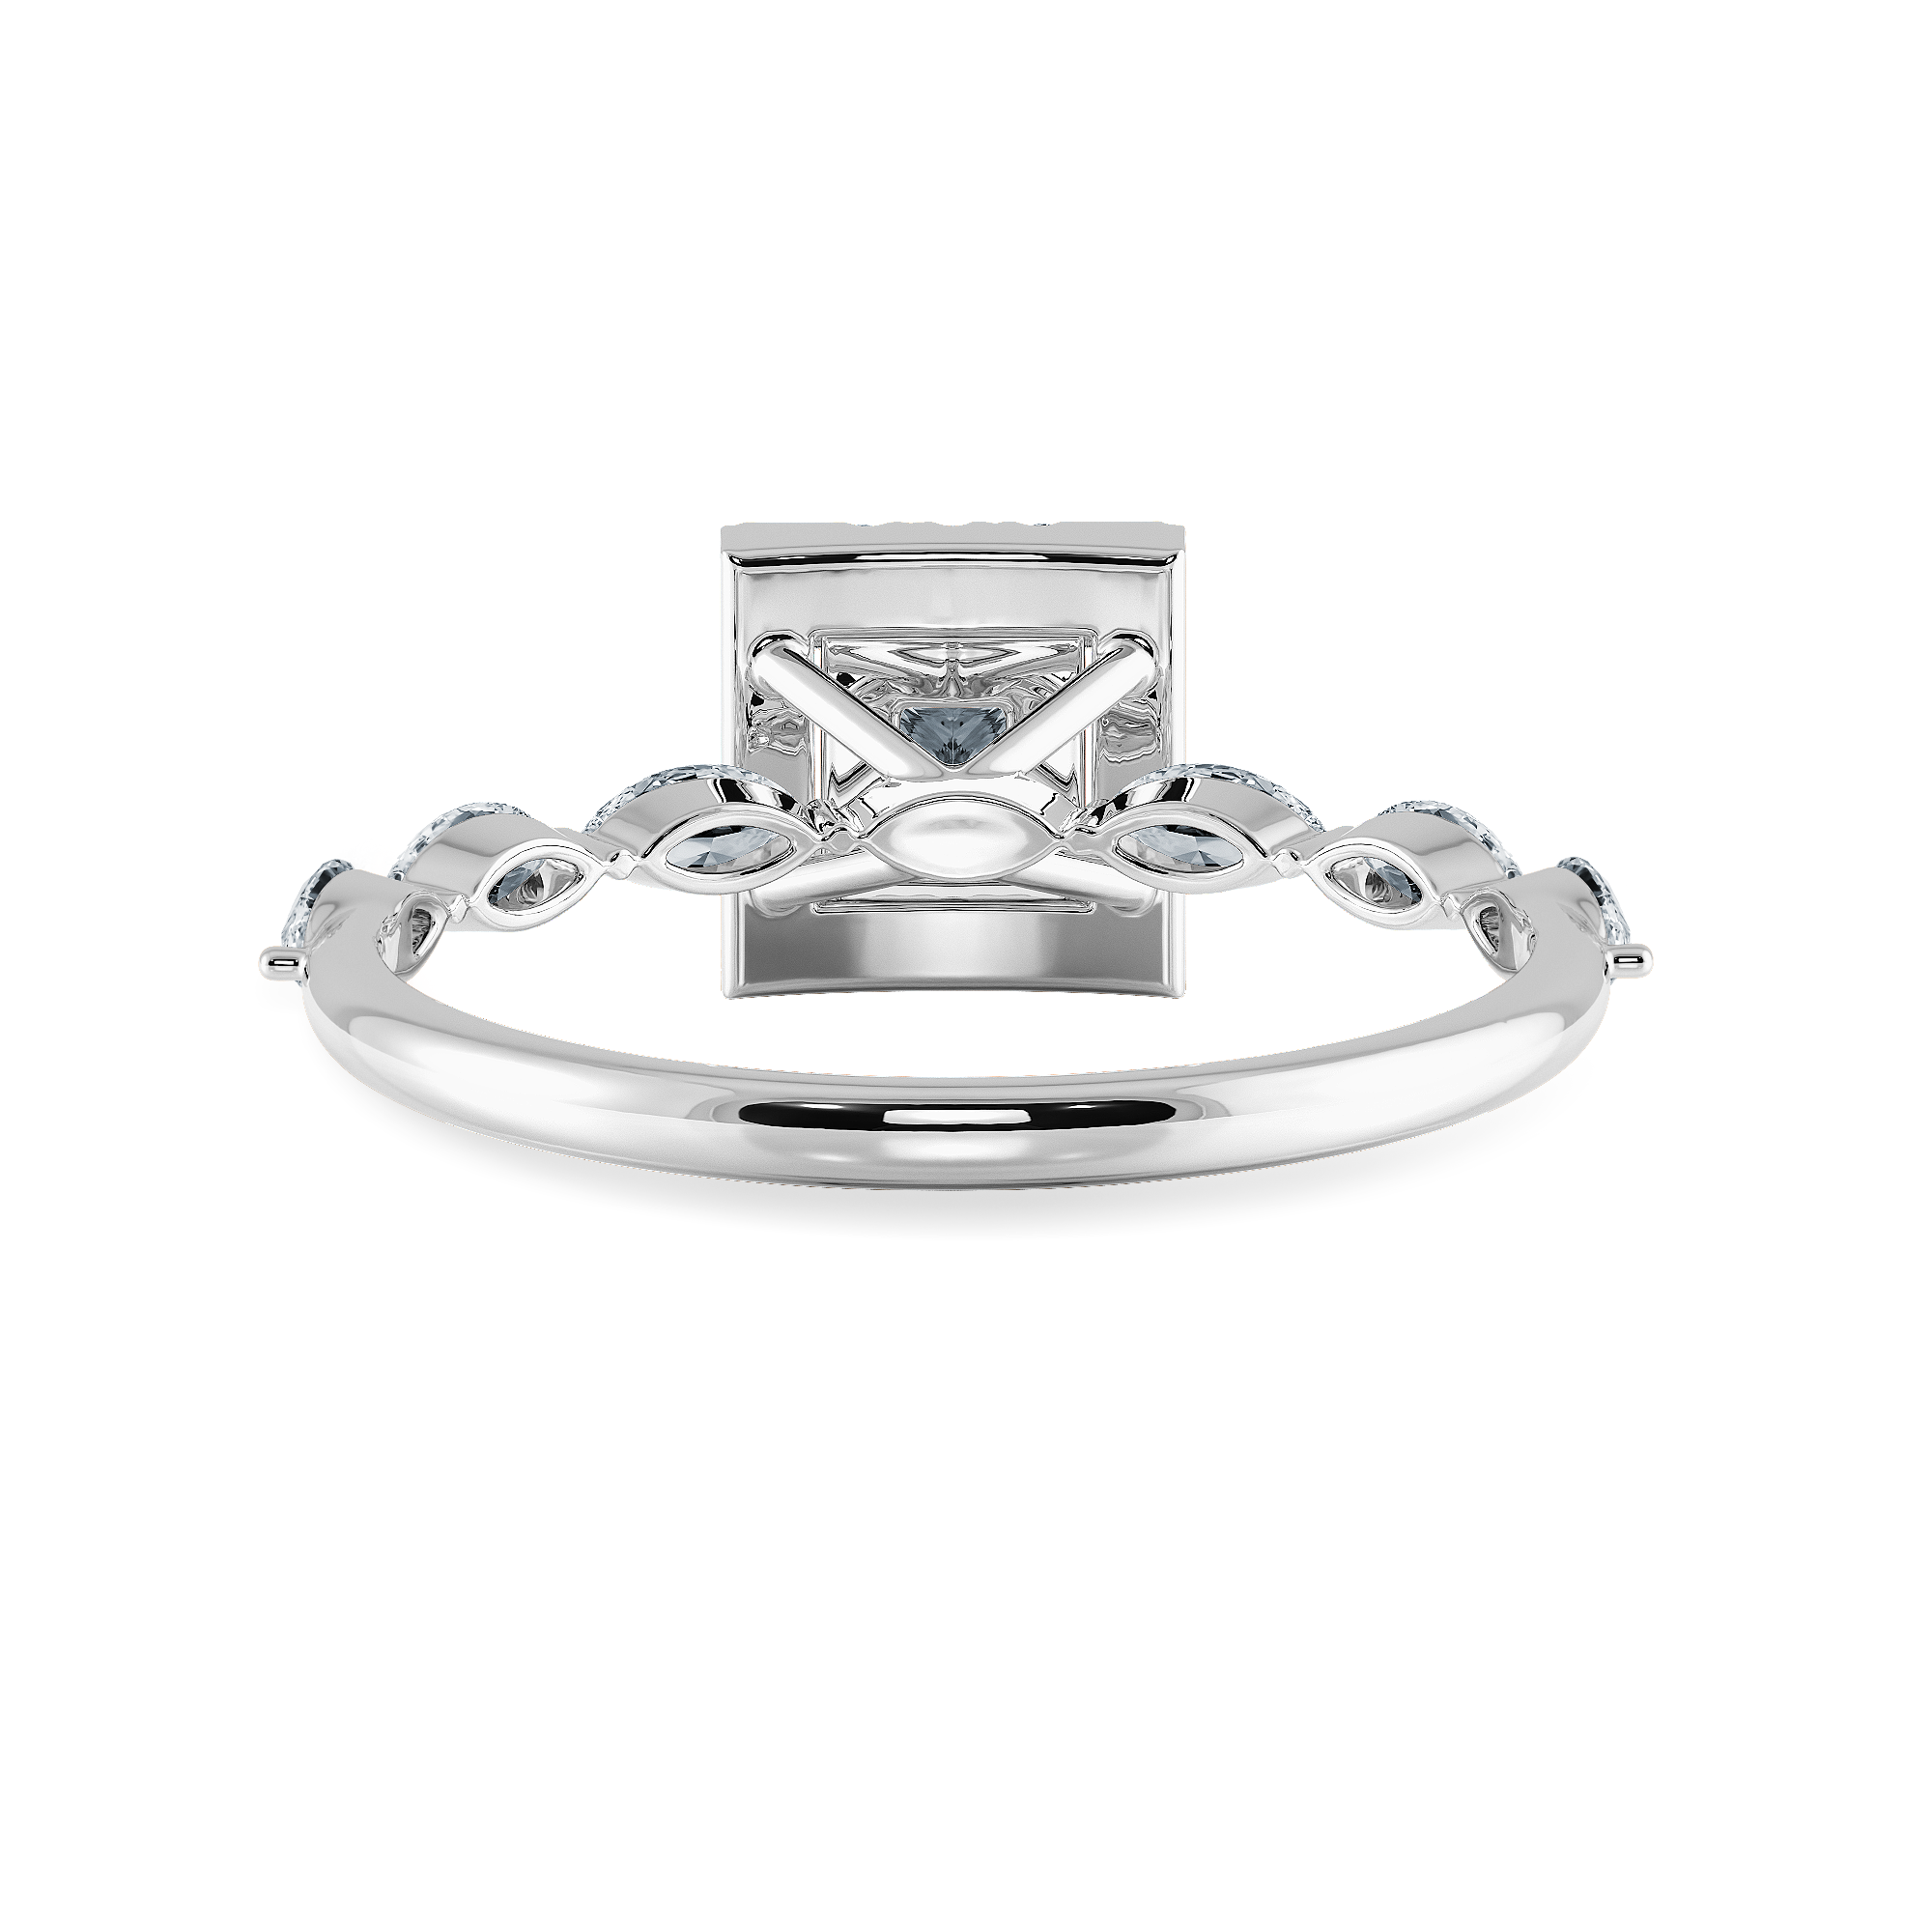 1-Carat Princess Cut Solitaire Halo Diamond with Marquise Cut Diamond Accents Platinum Ring JL PT 1277-C   Jewelove.US